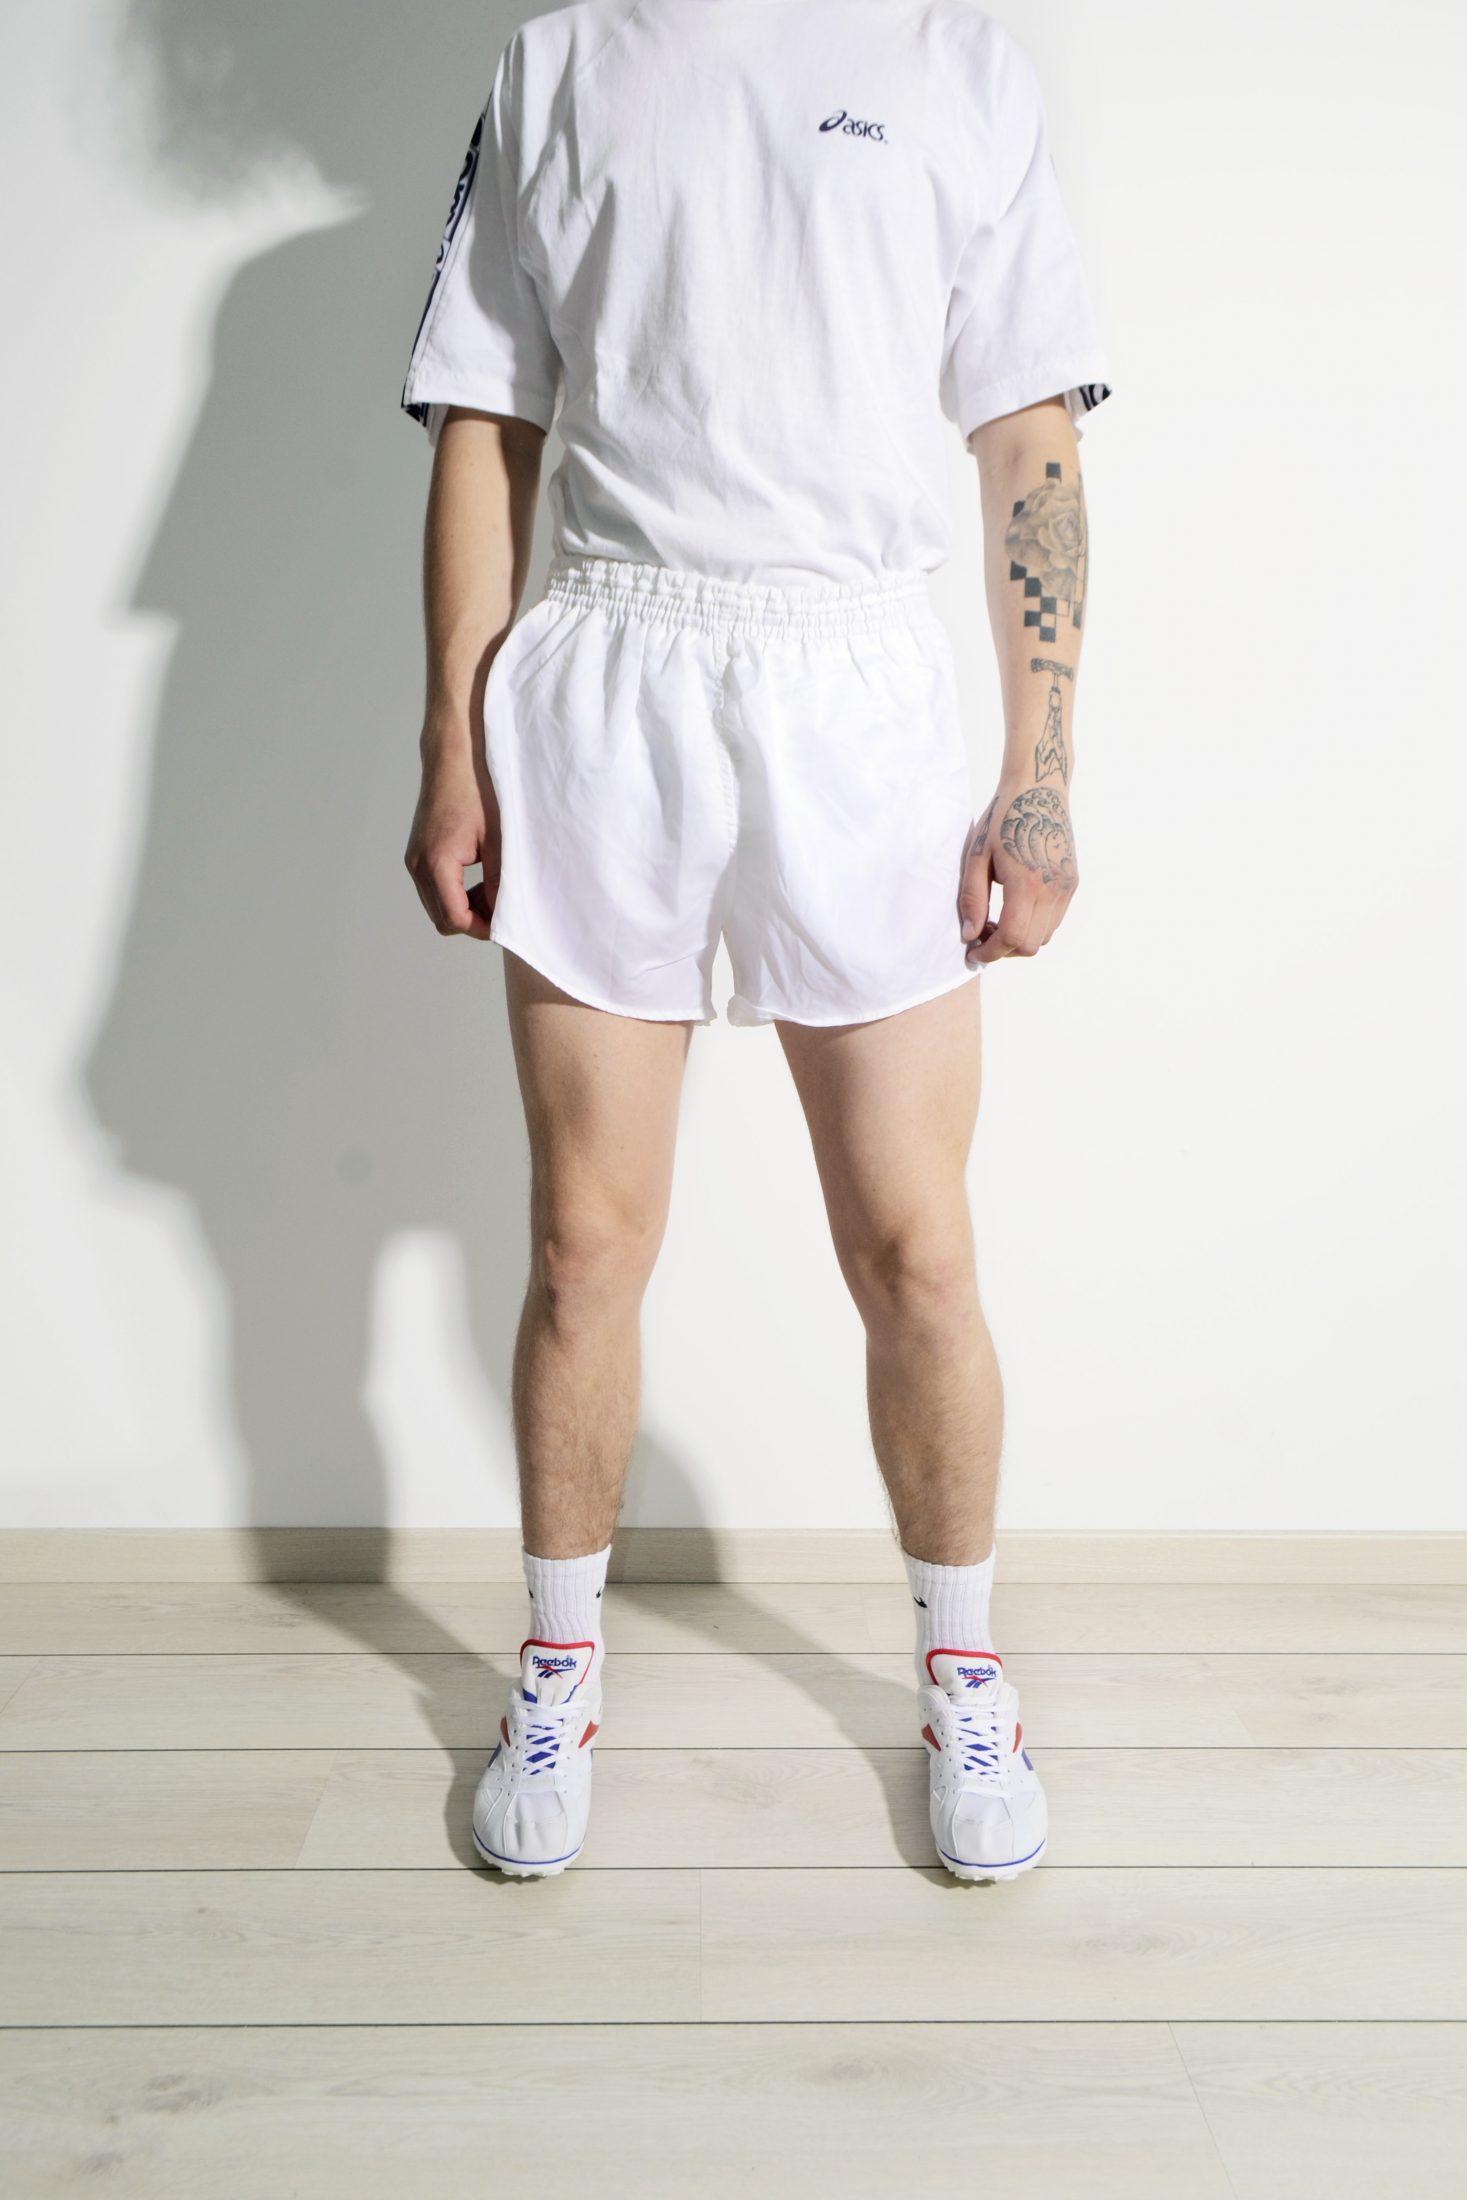 Retro white sport shorts for men | HOT MILK vintage clothing online